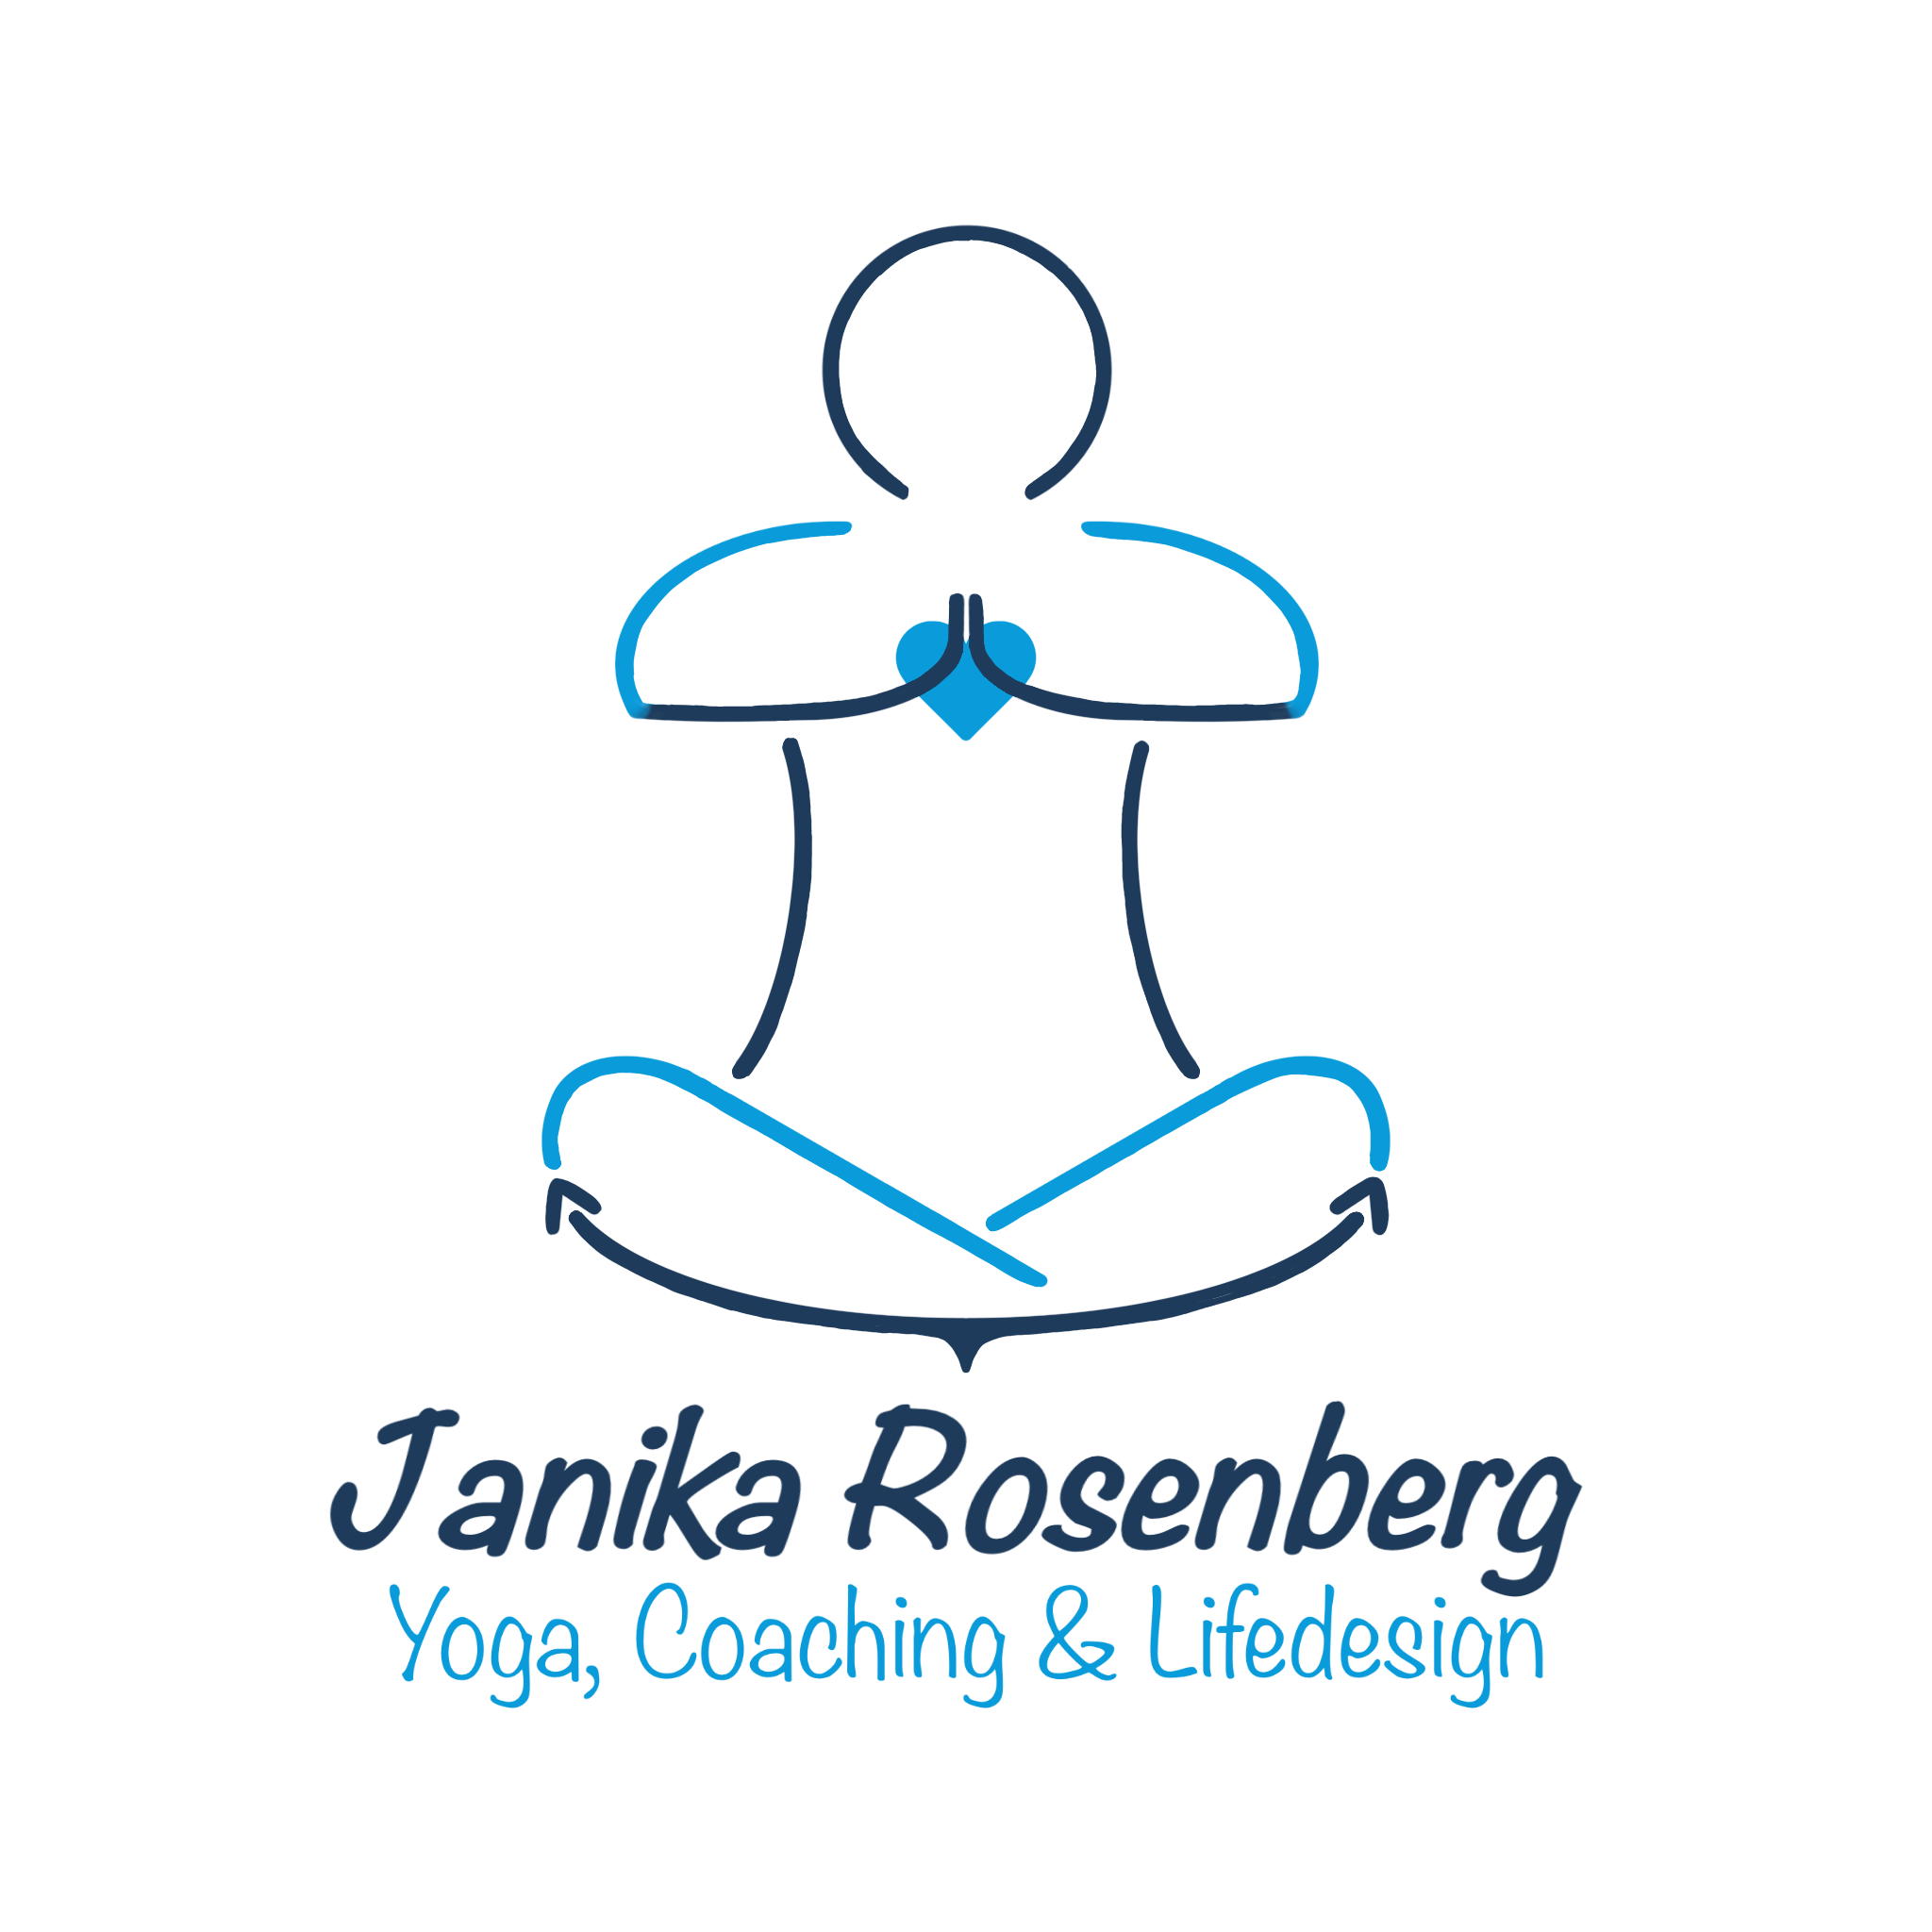 Yoga, Coaching & Lifedesign